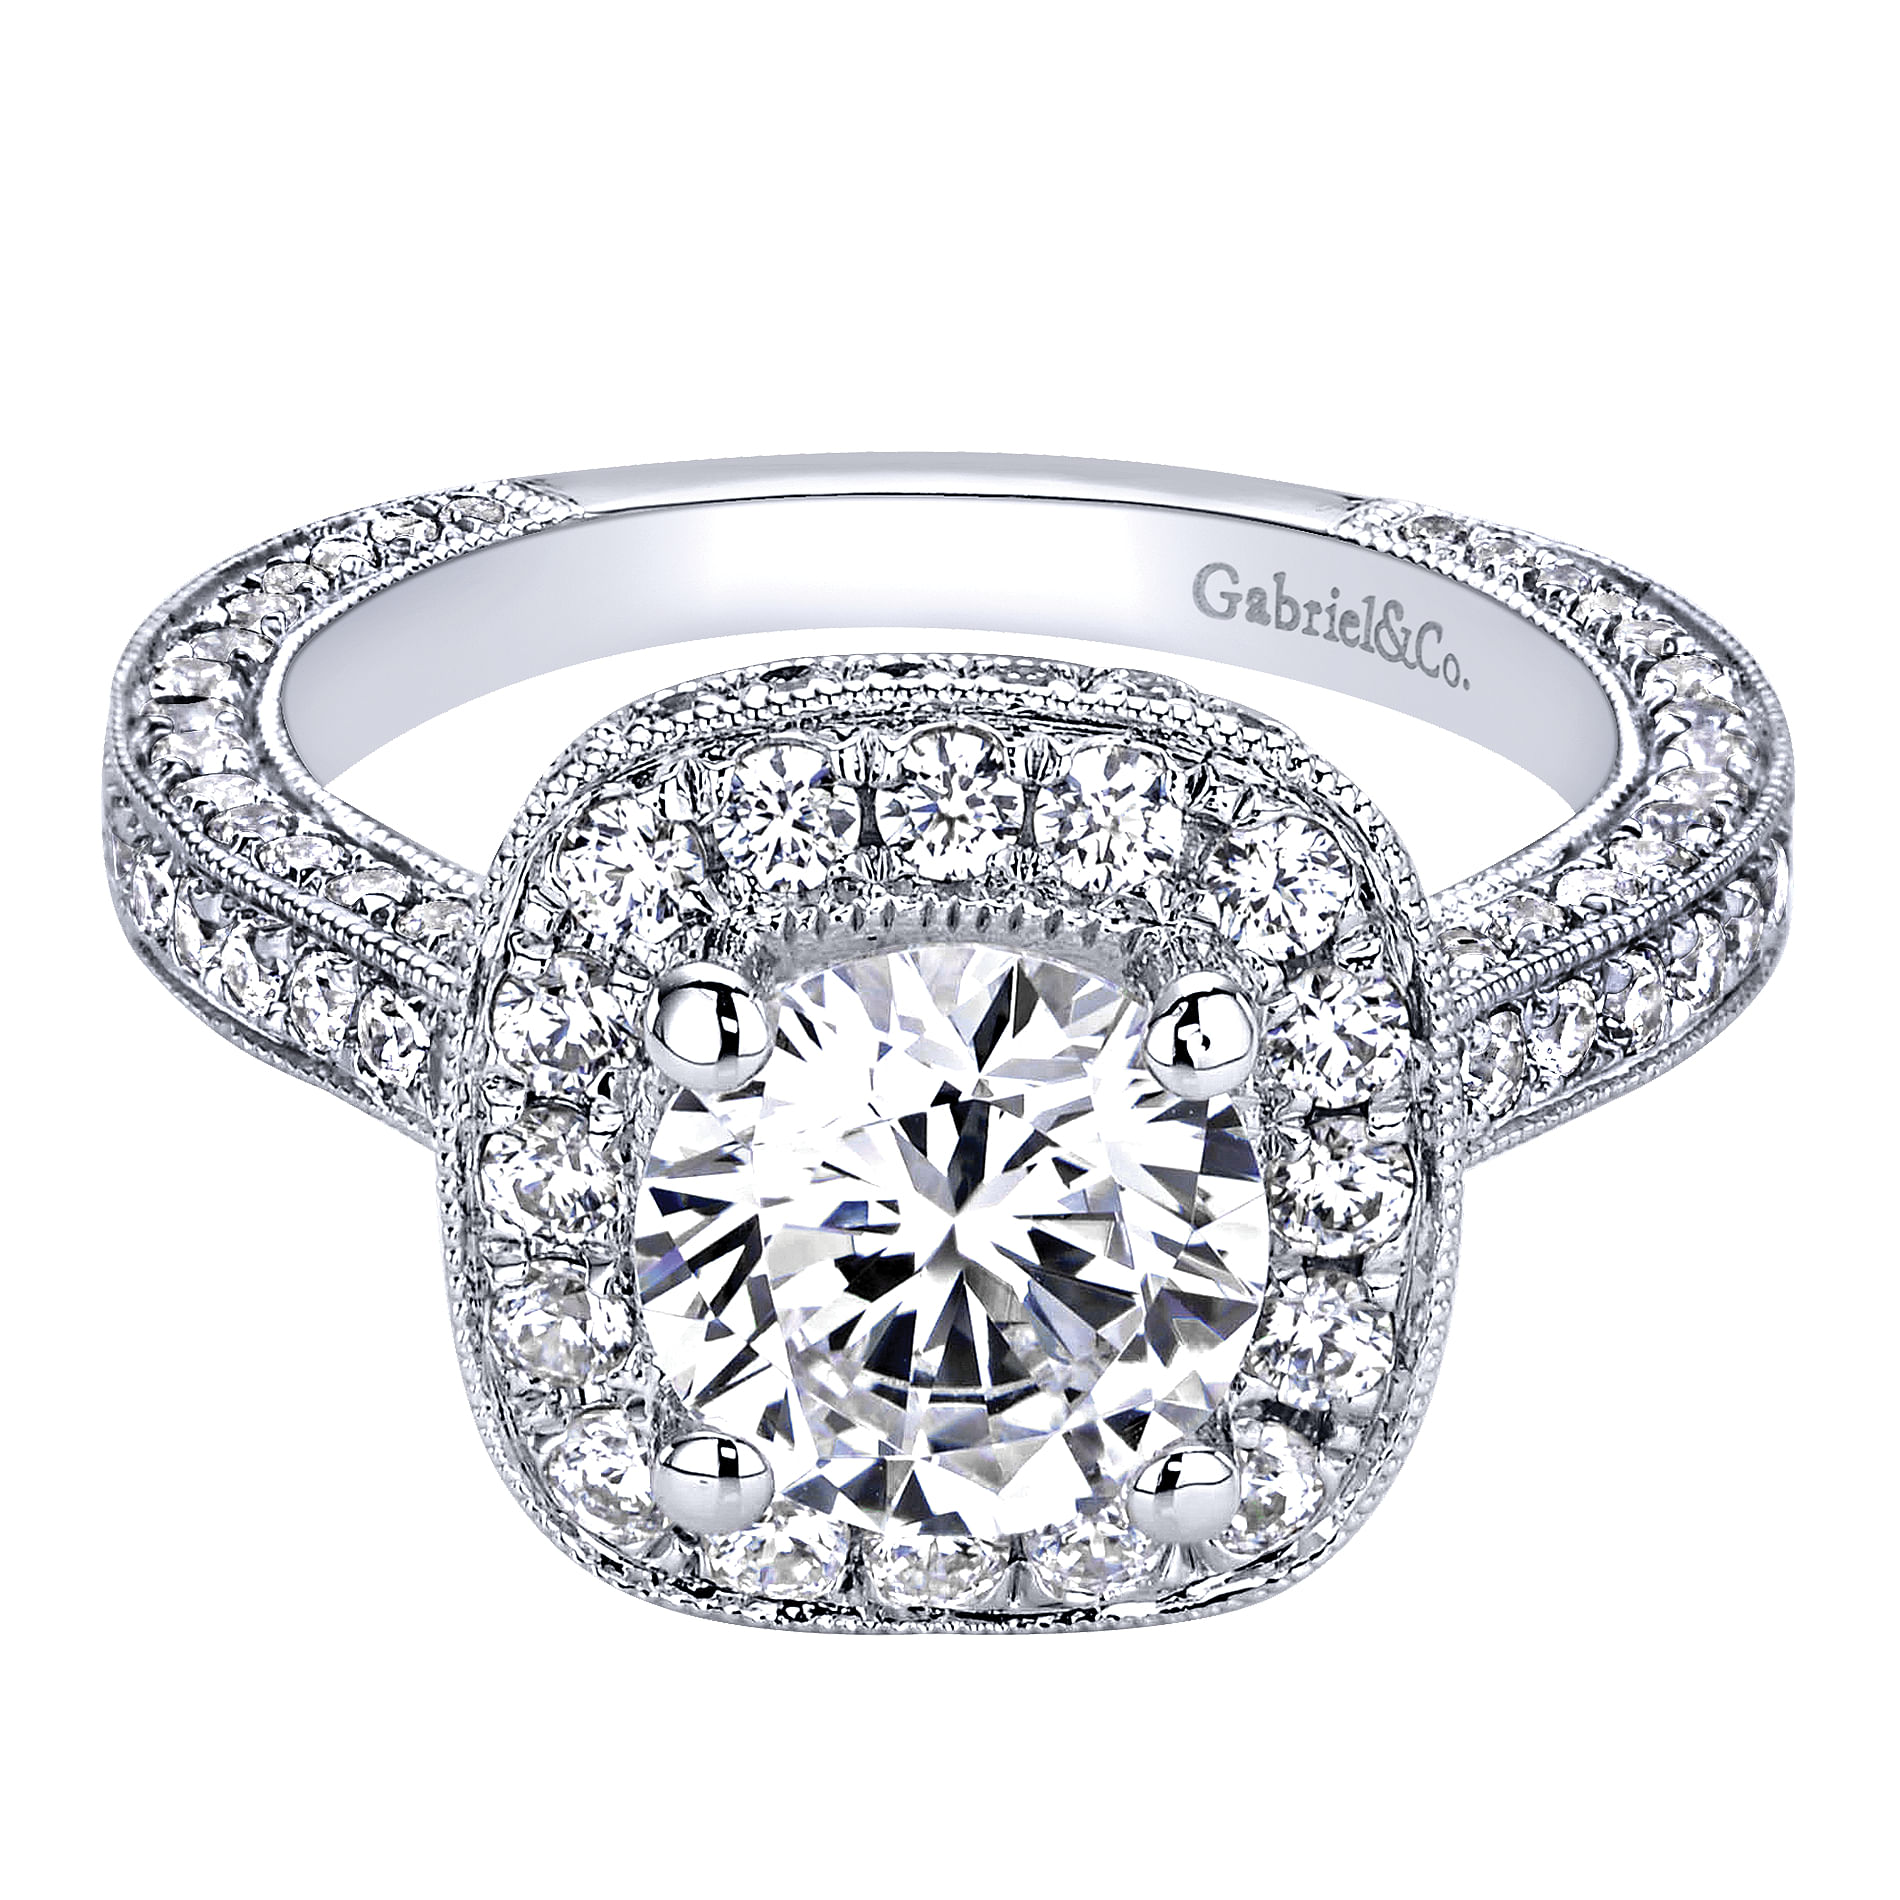 Tally - Vintage Inspired 14K White Gold Round Halo Diamond Engagement Ring